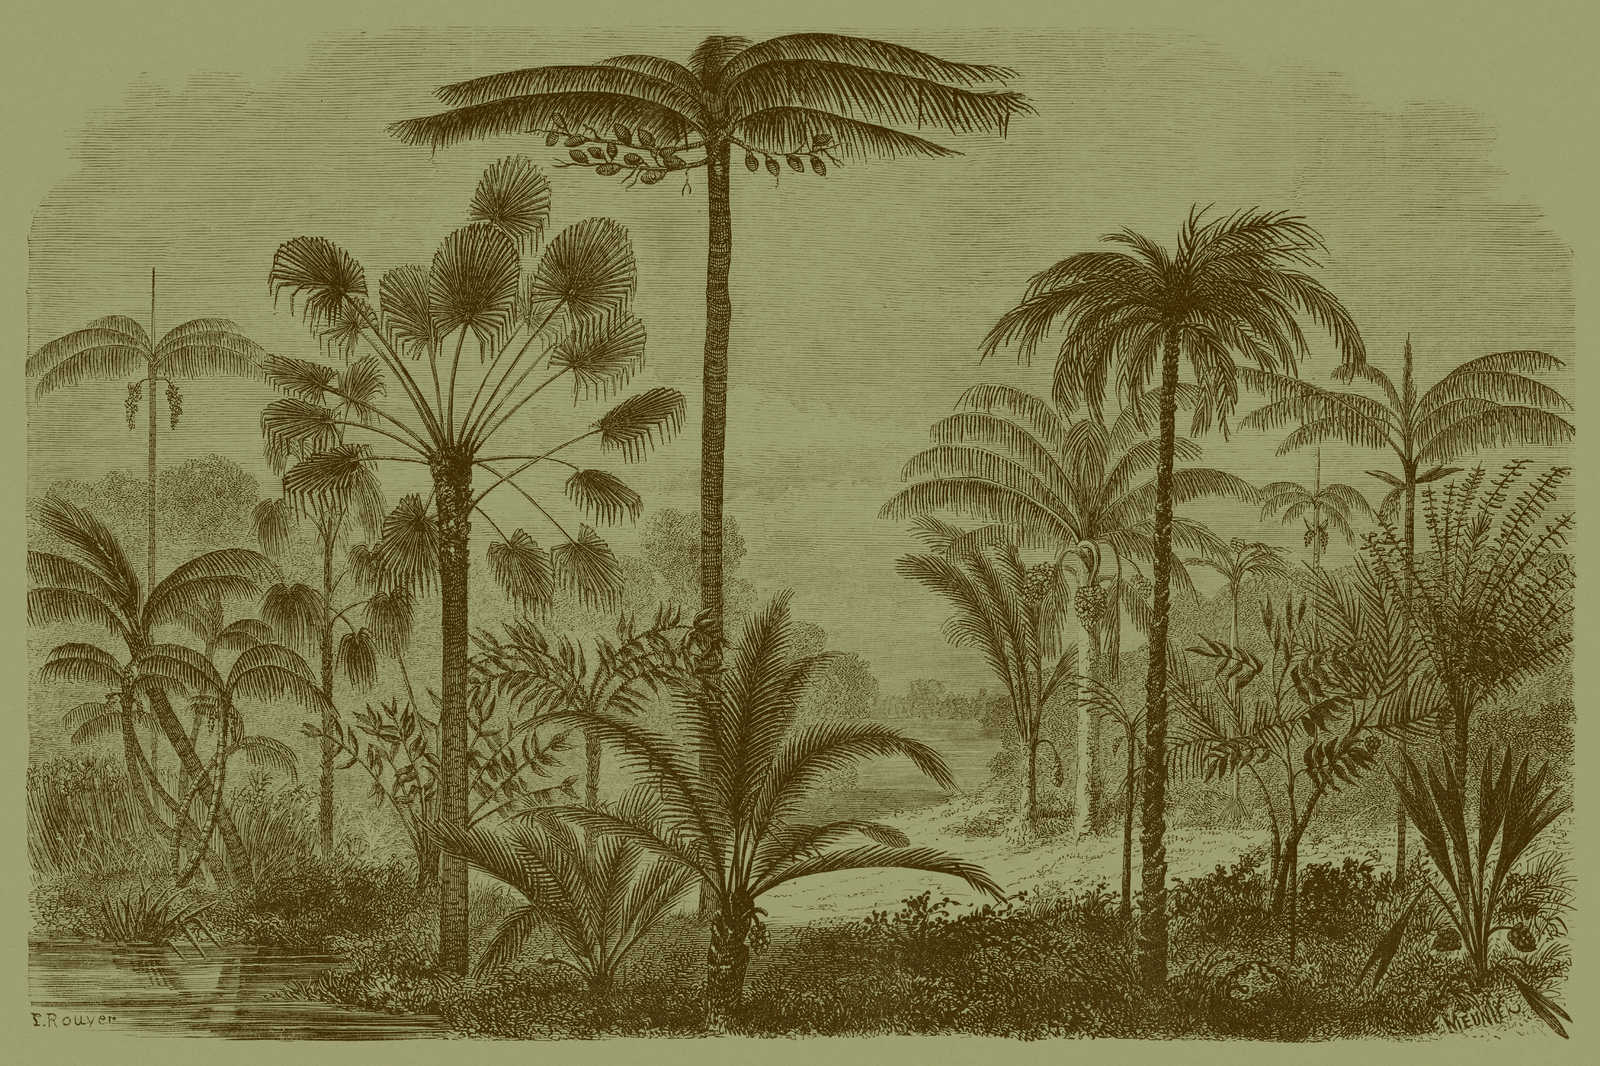             Jurassic 1 - Canvas schilderij Jungle motief koperplaat - 0.90 m x 0.60 m
        